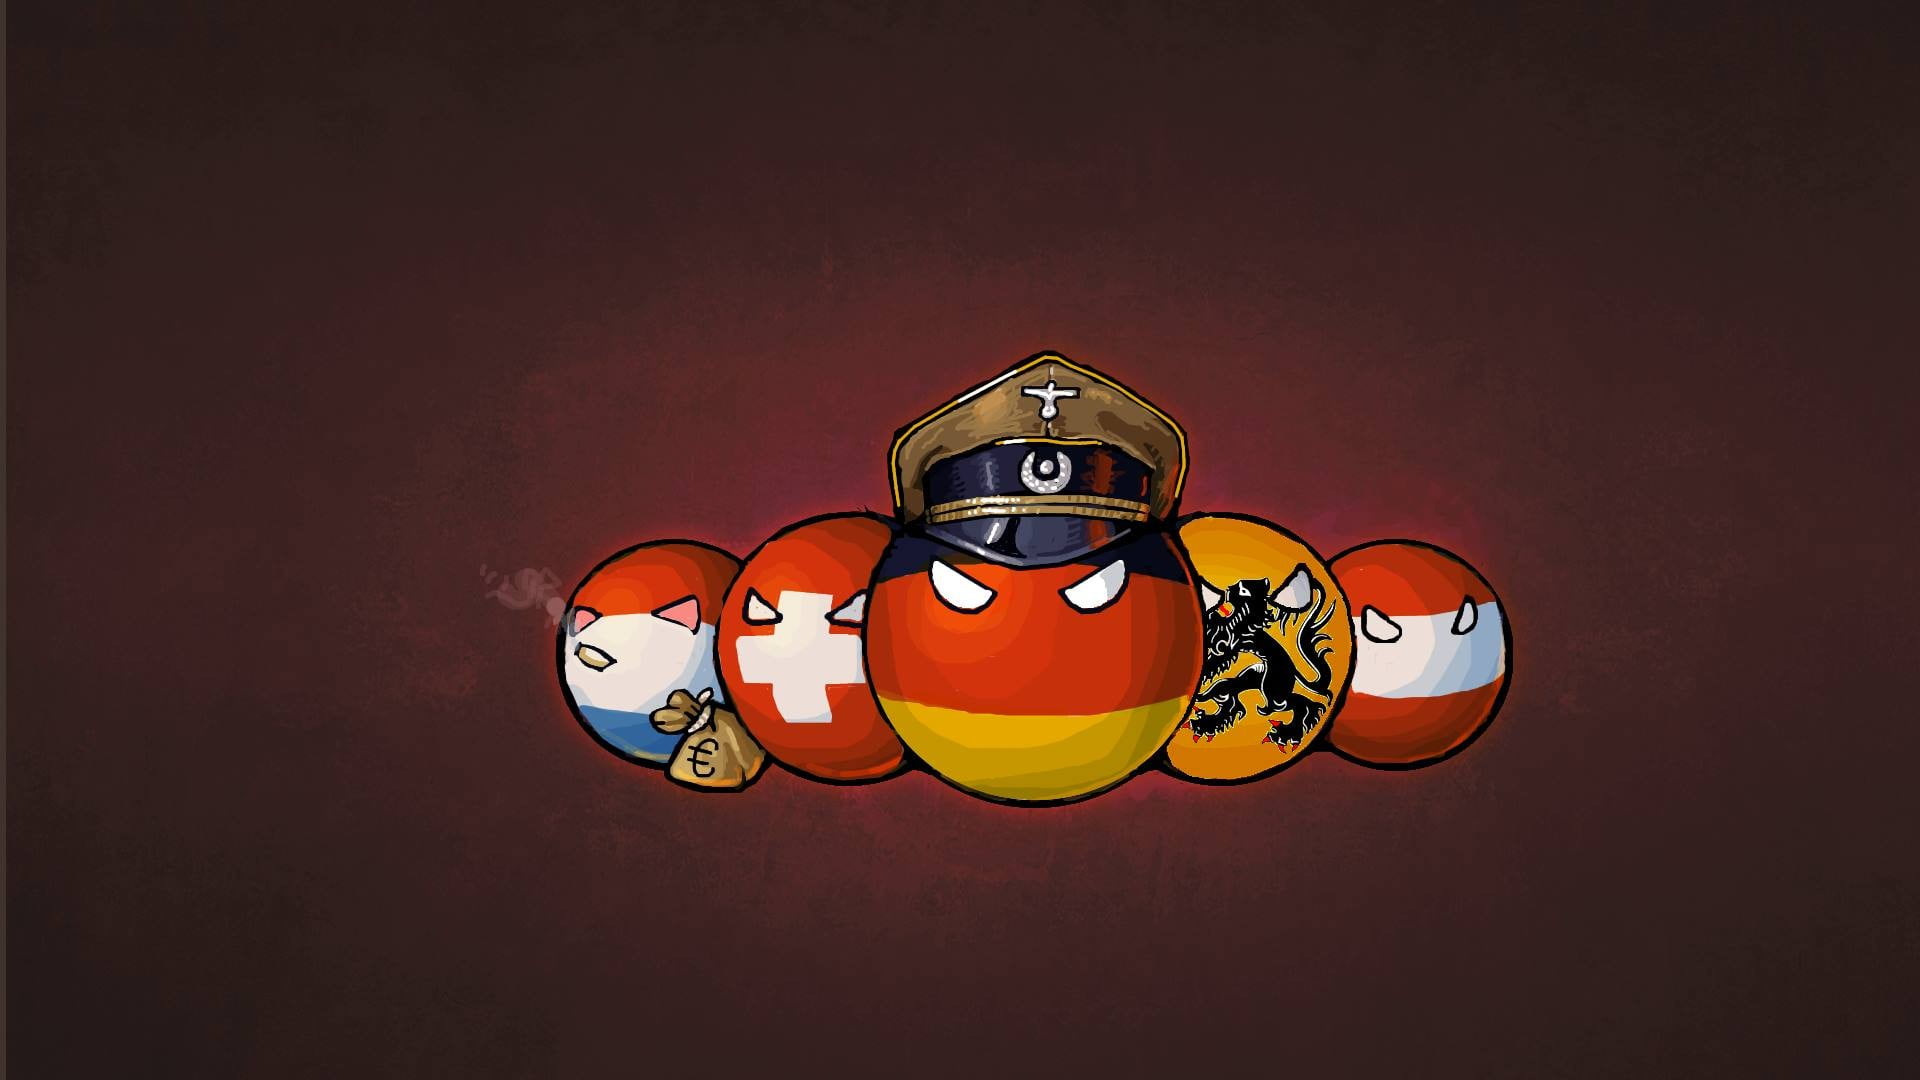 round officer emoji wallpaper, anime, countryballs, Germany, Switzerland